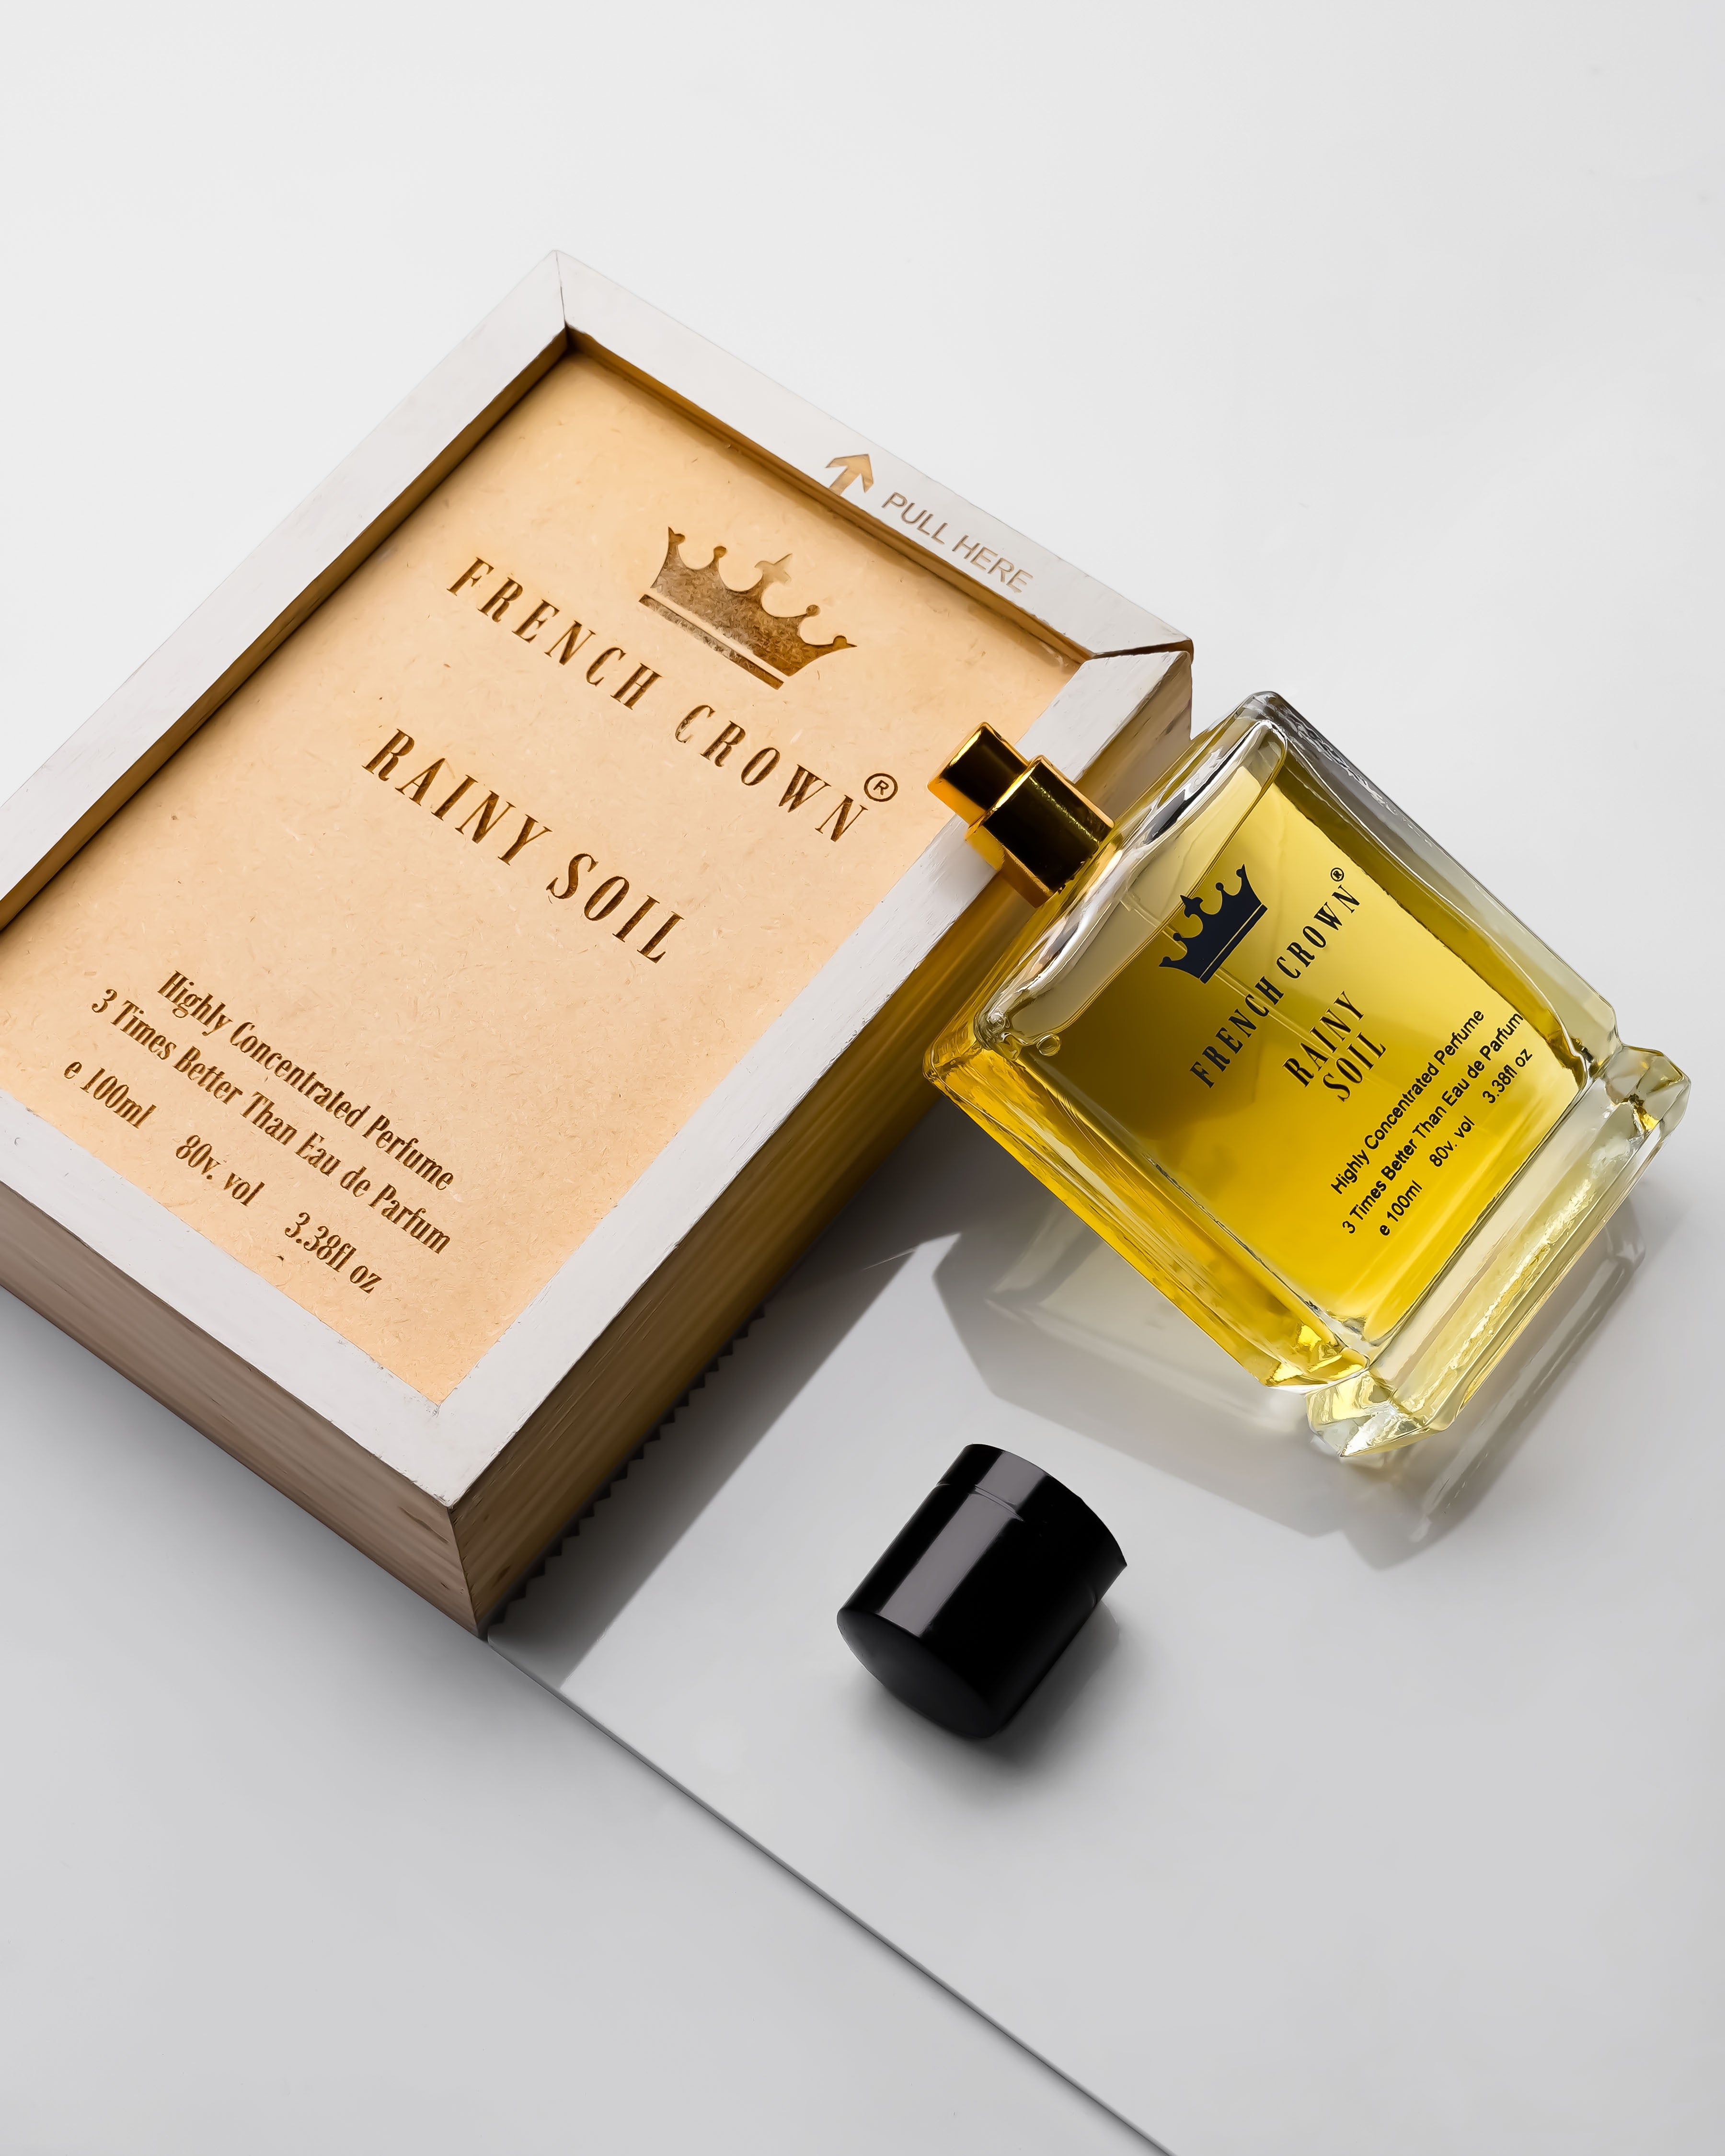 French Crown Rainy Soil Perfume PF018